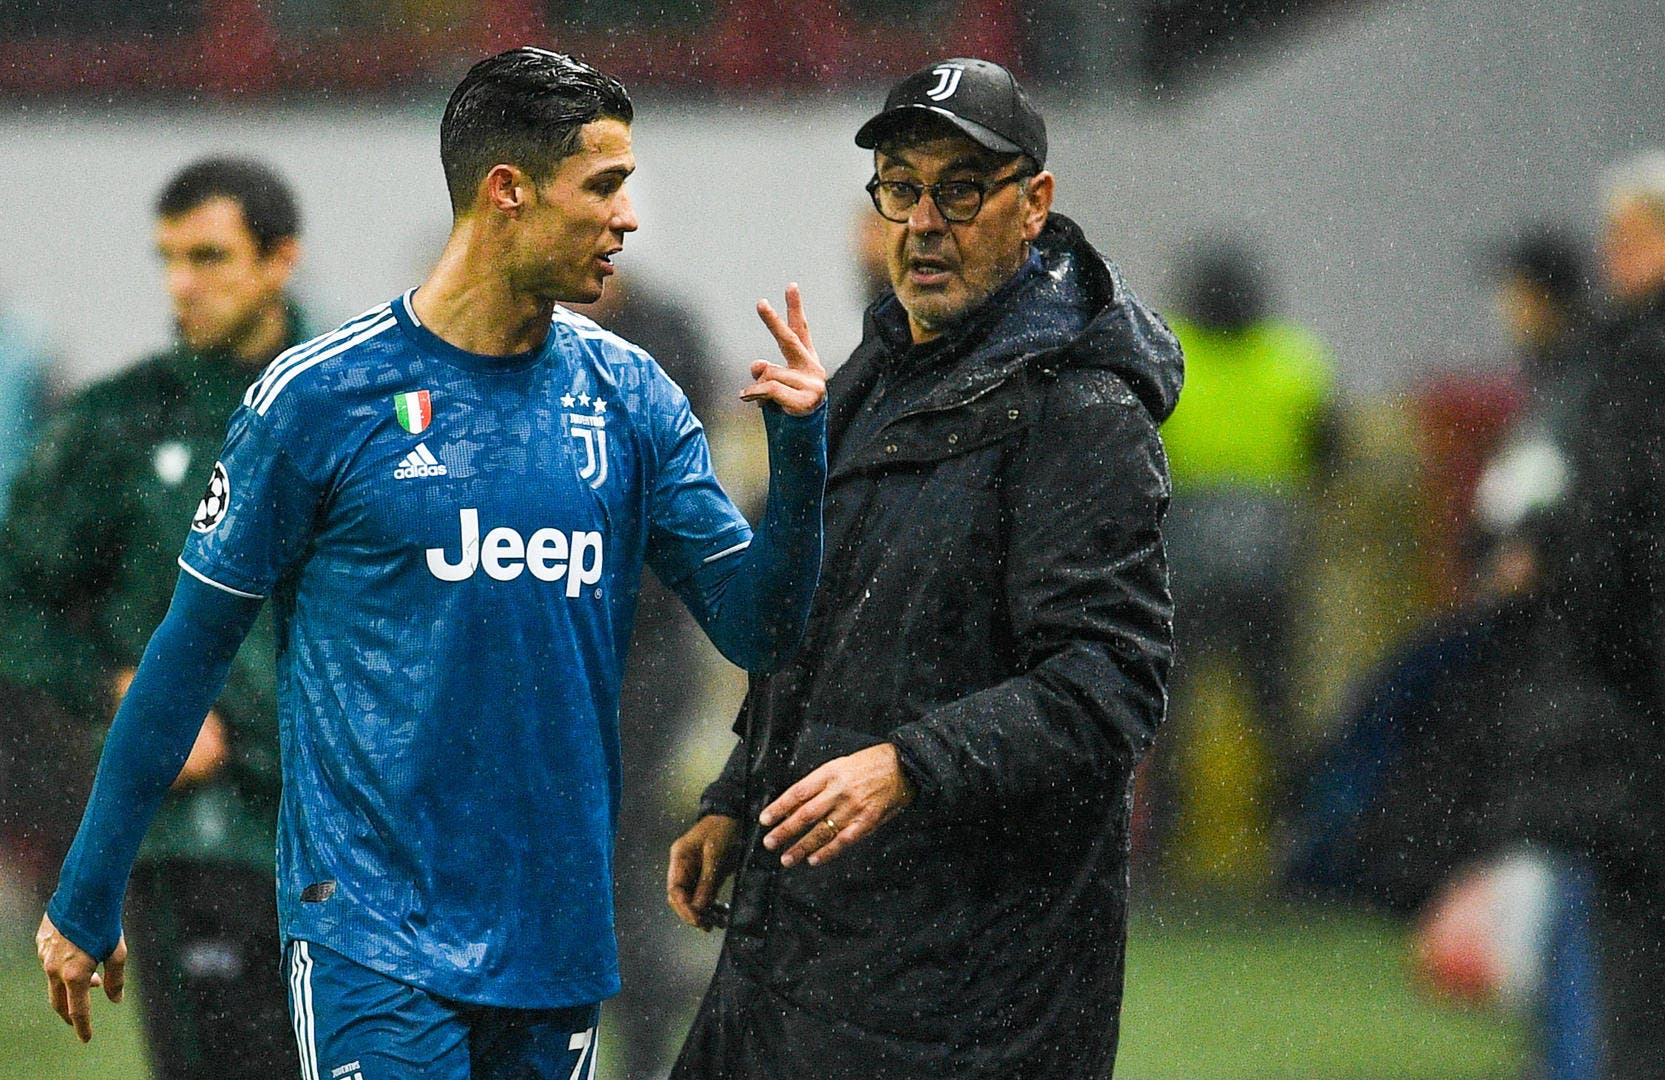 Juventus : Cristiano Ronaldo fait une demande à Maurizio Sarri, mais ce dernier refuse